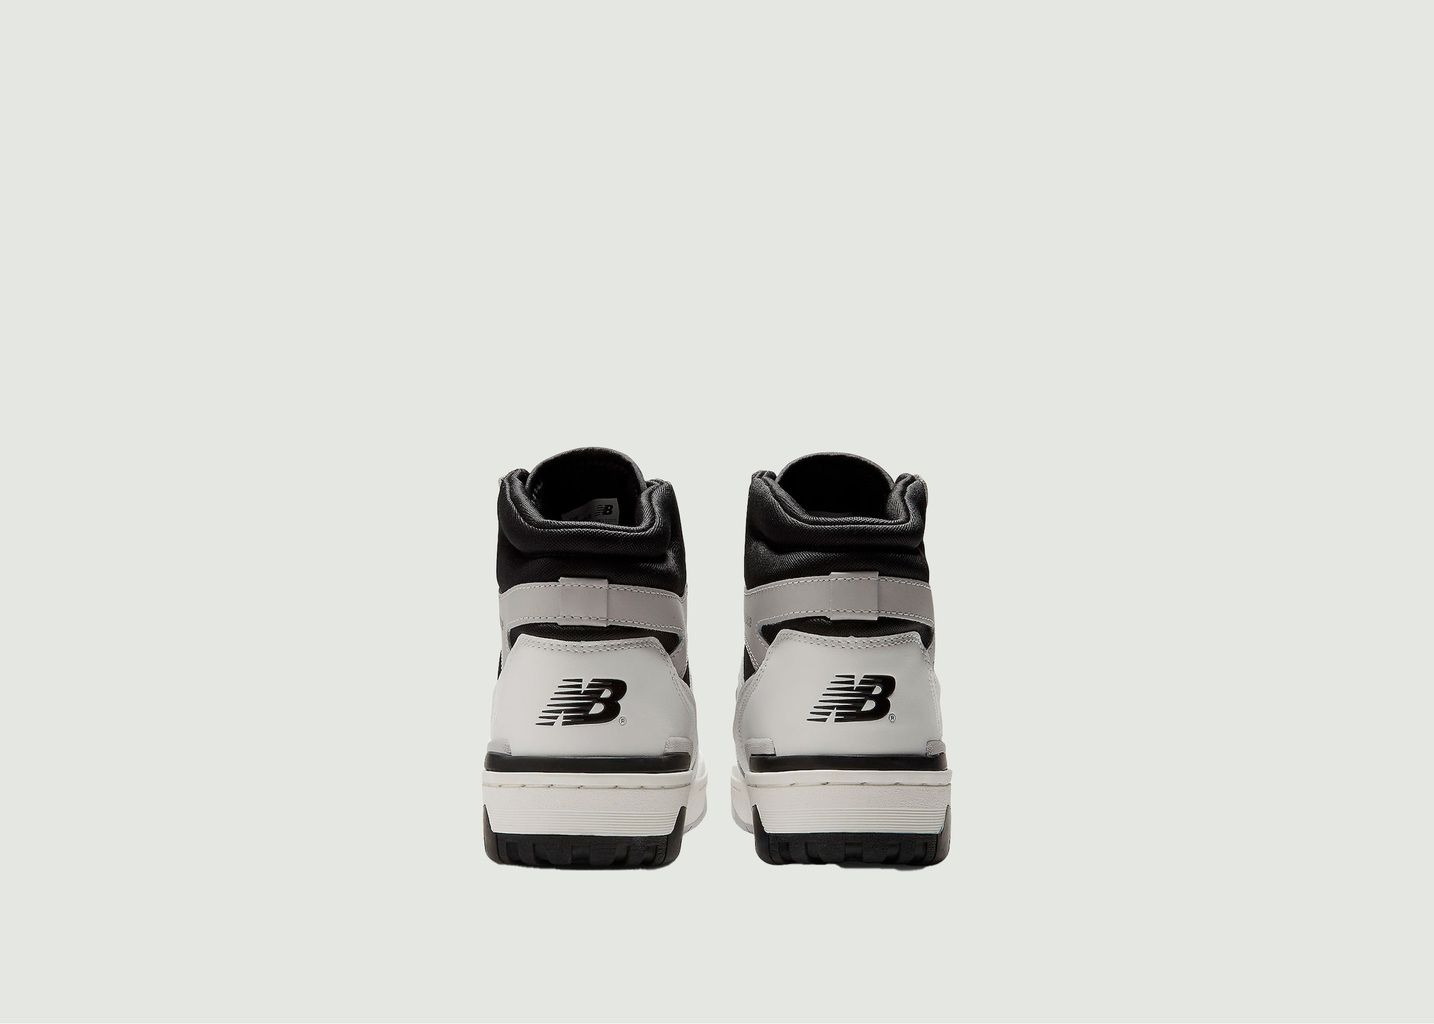 Sneaker NB 650 - New Balance